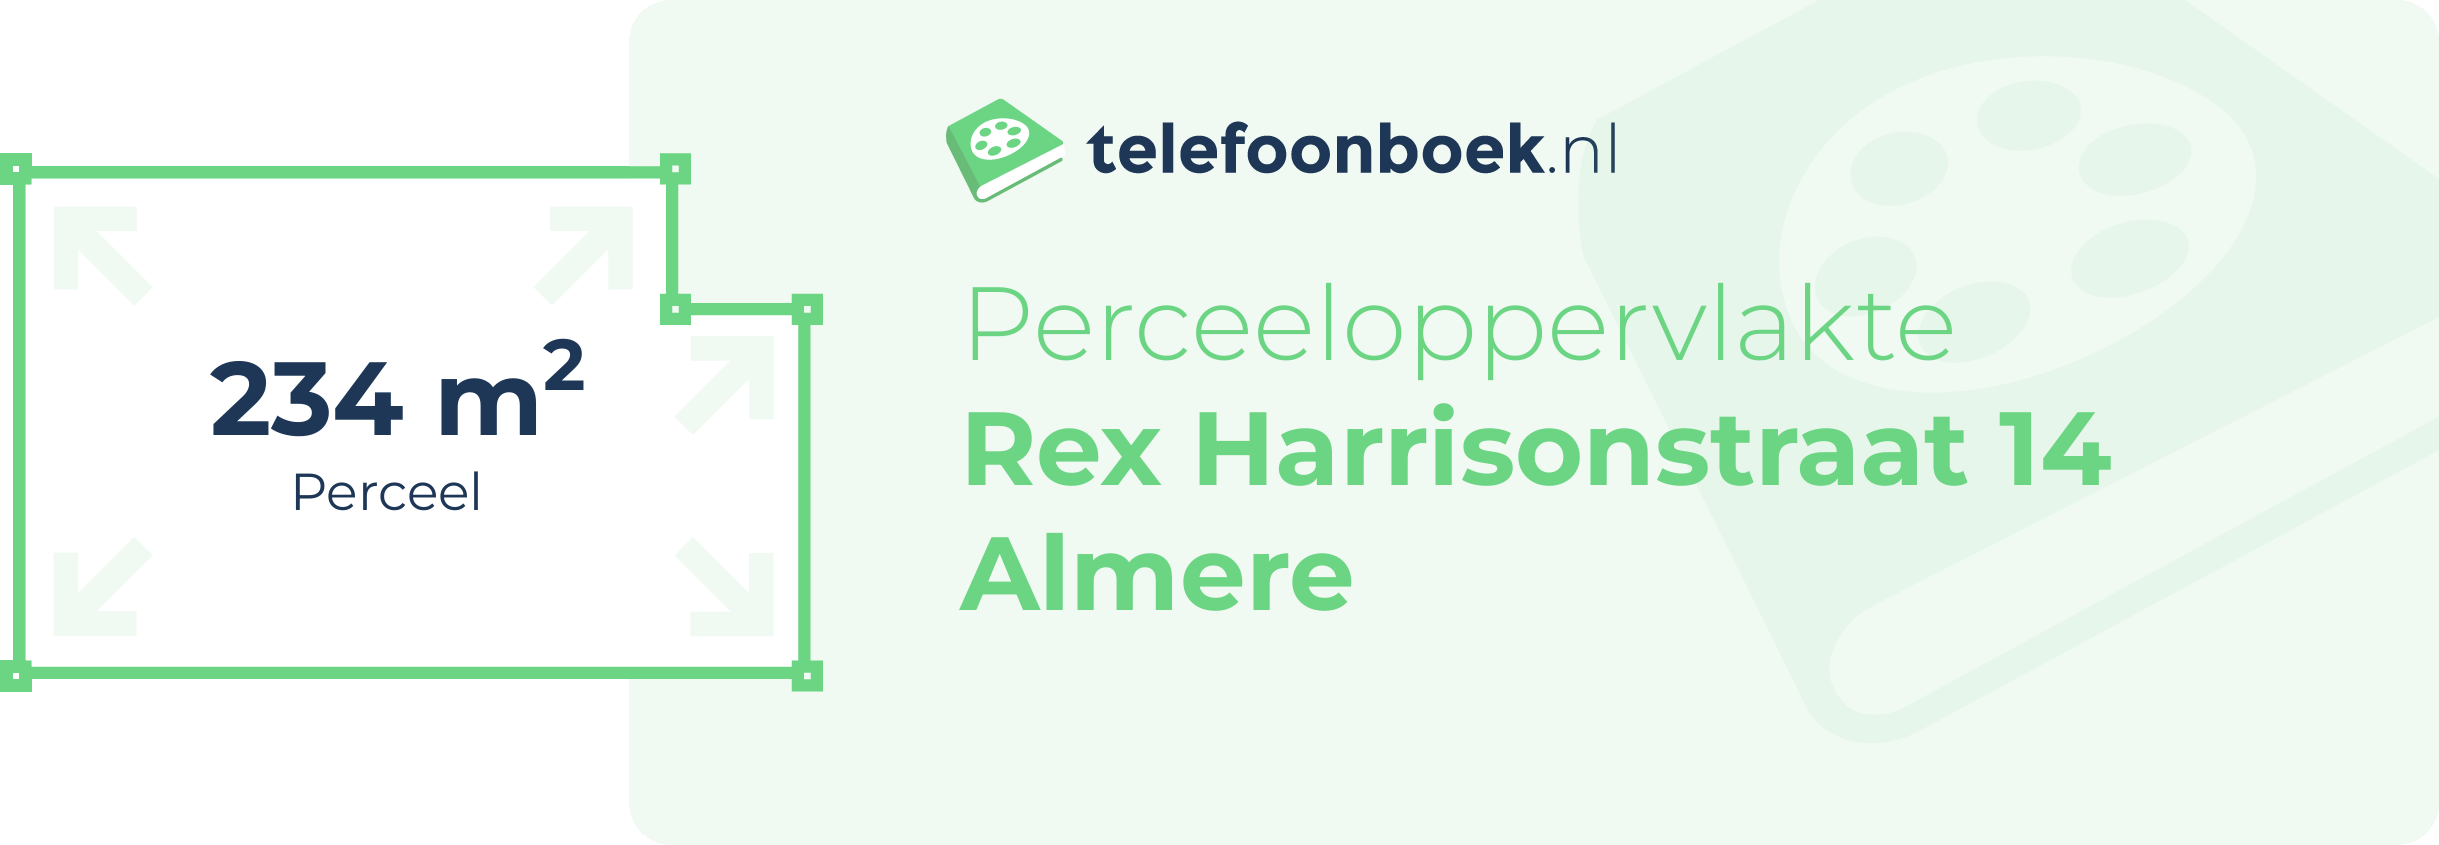 Perceeloppervlakte Rex Harrisonstraat 14 Almere